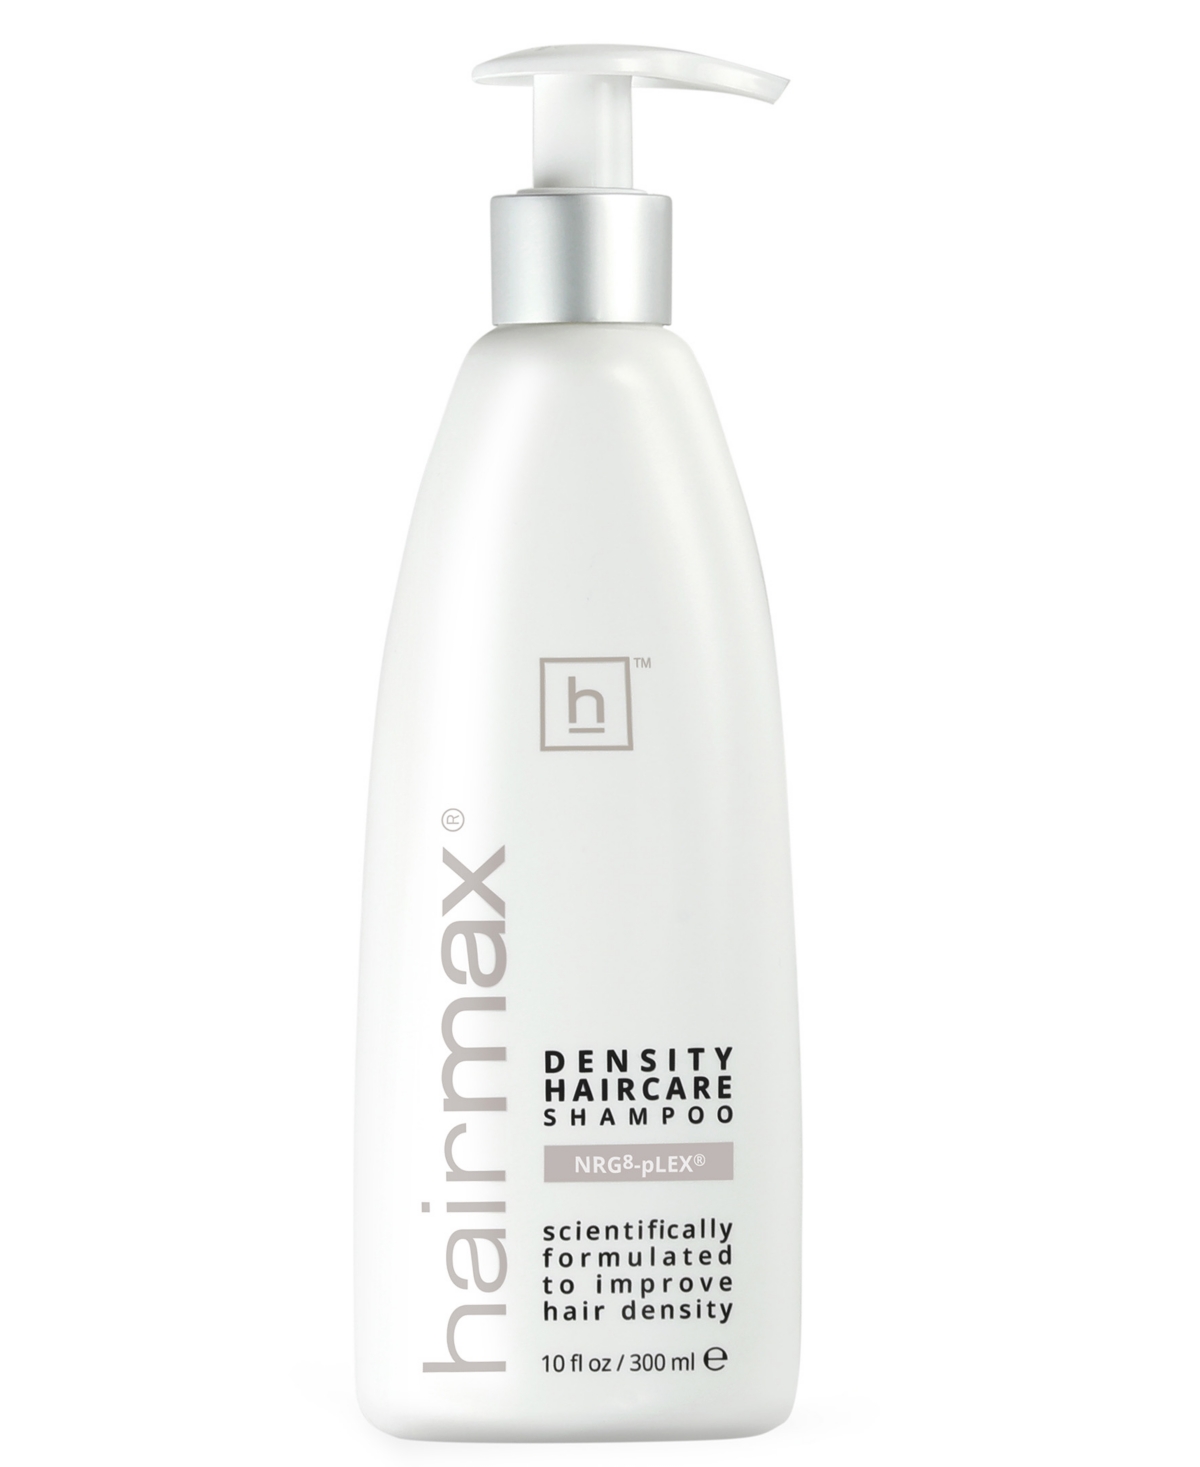 Density Haircare Shampoo, 10 fl. oz.